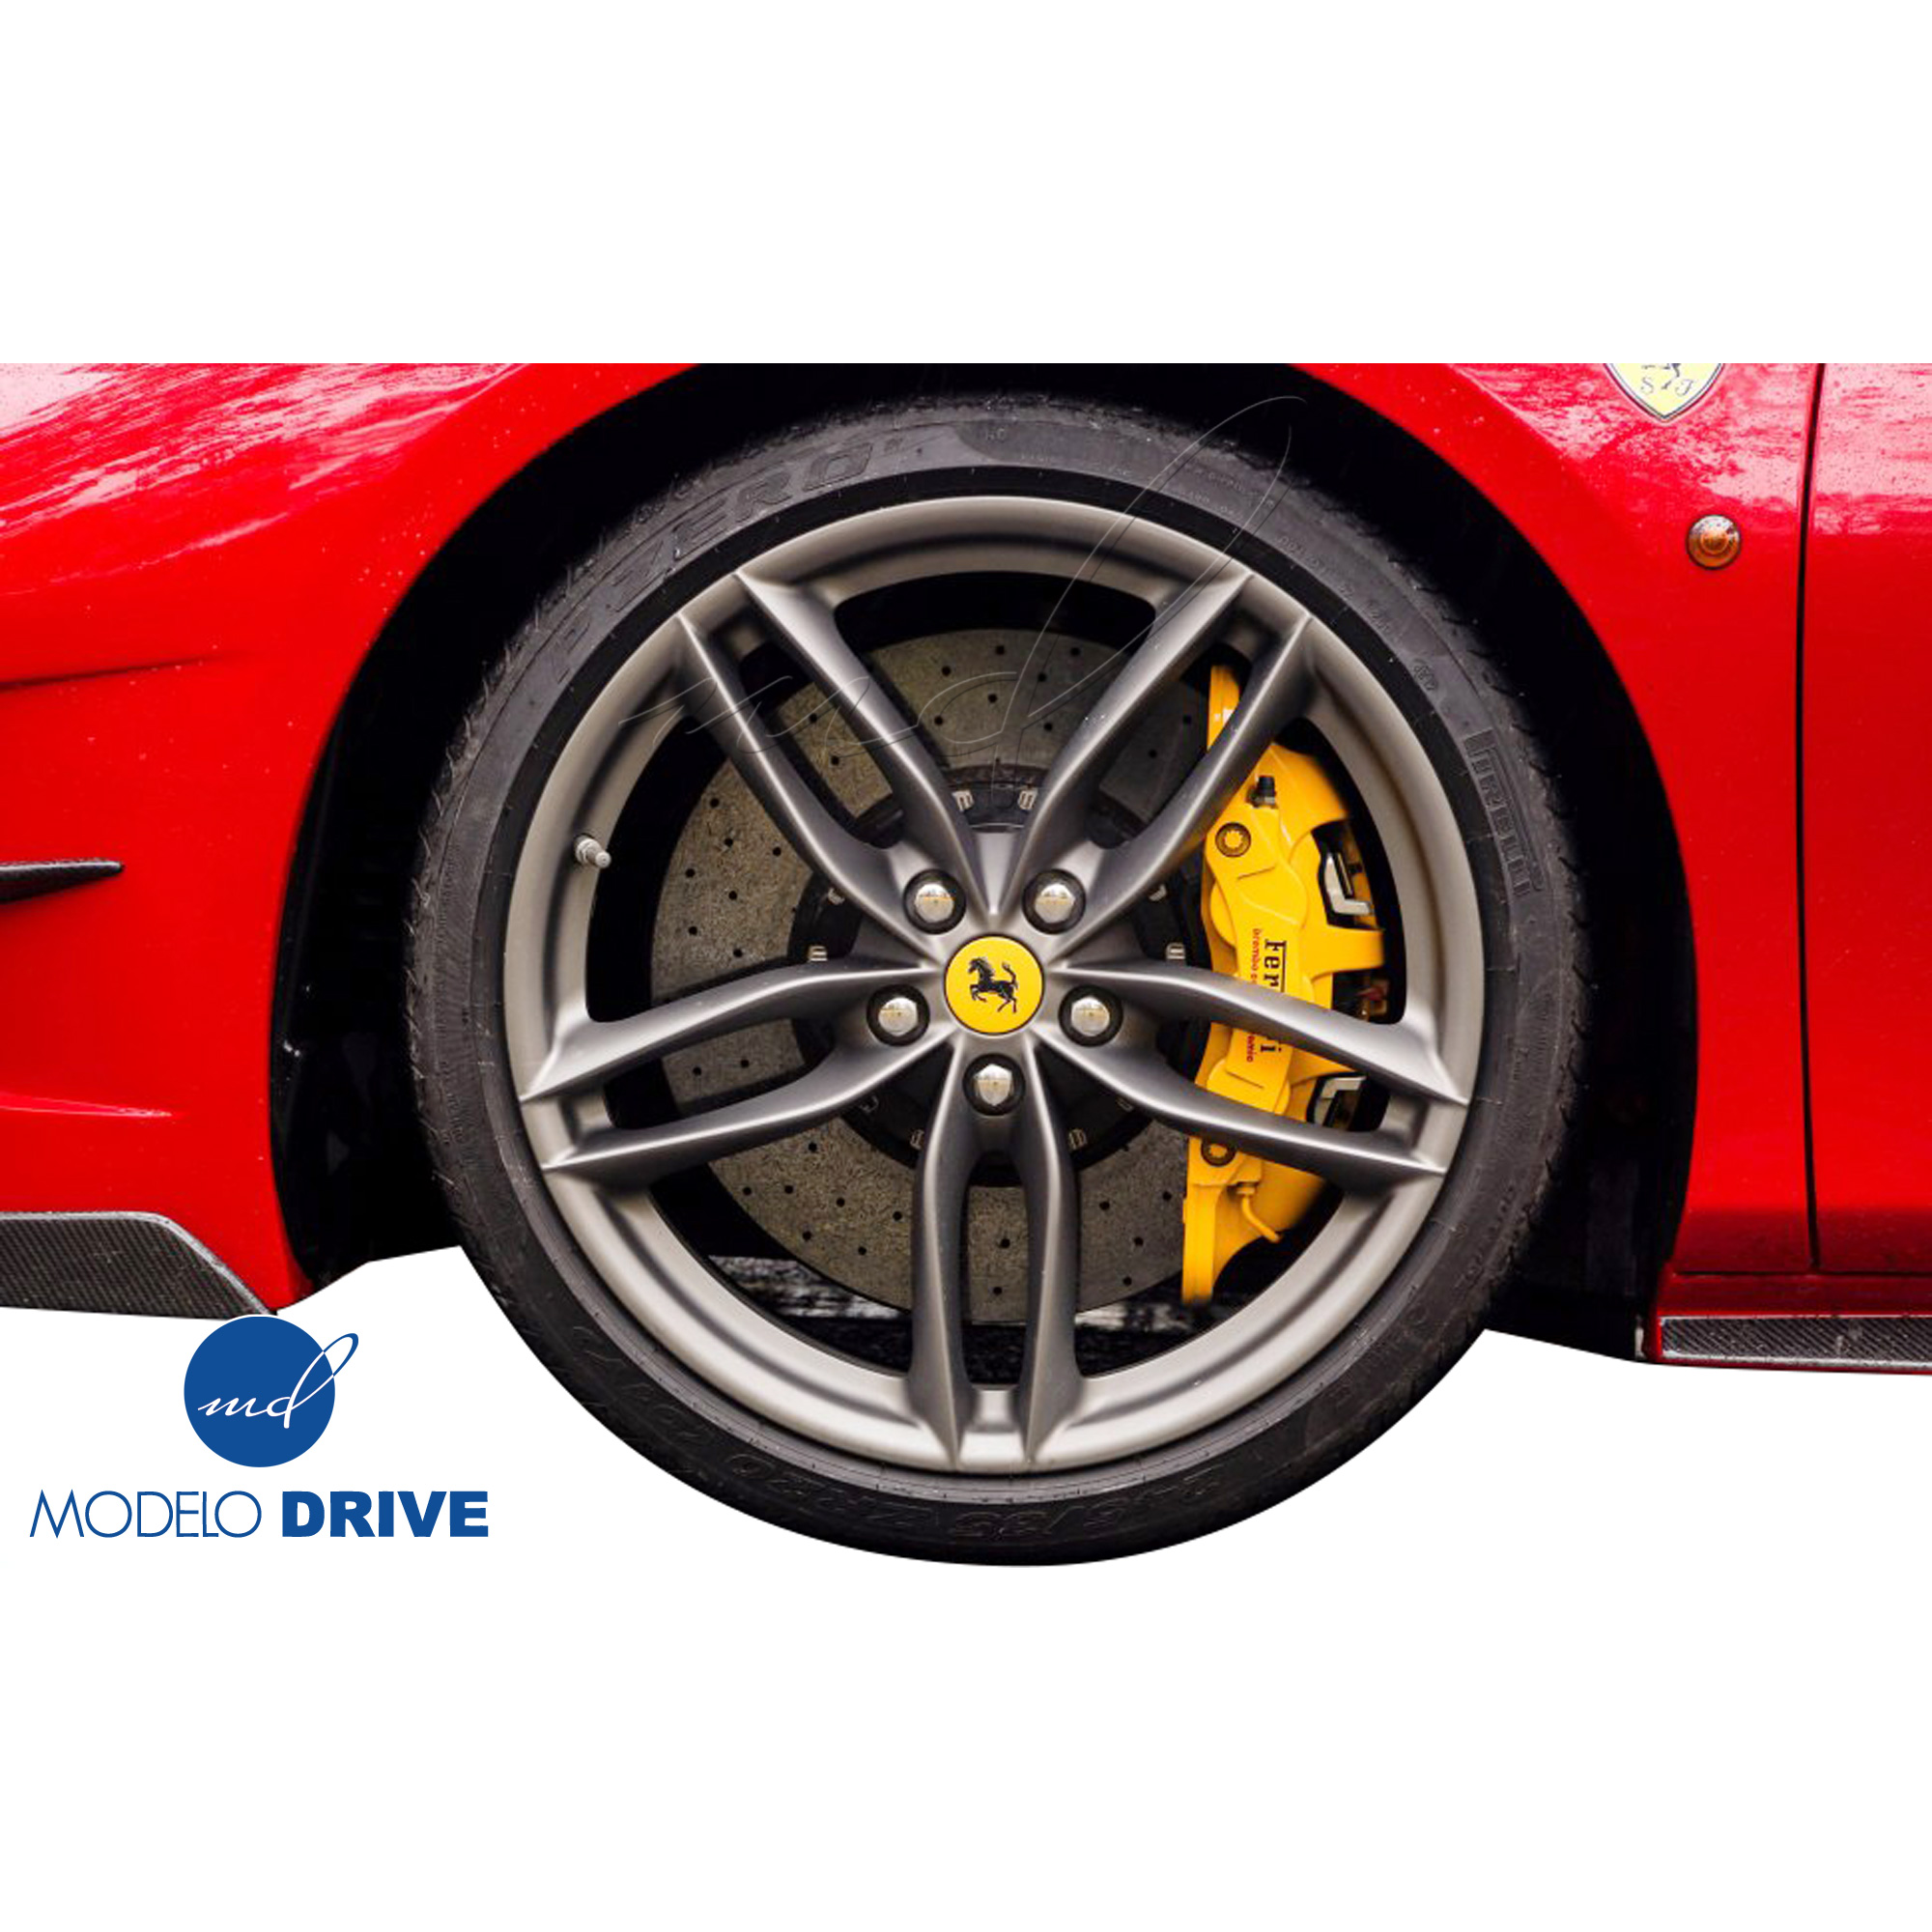 ModeloDrive Partial Carbon Fiber MDES Side Skirts > Ferrari 488 GTB F142M 2016-2019 - Image 13